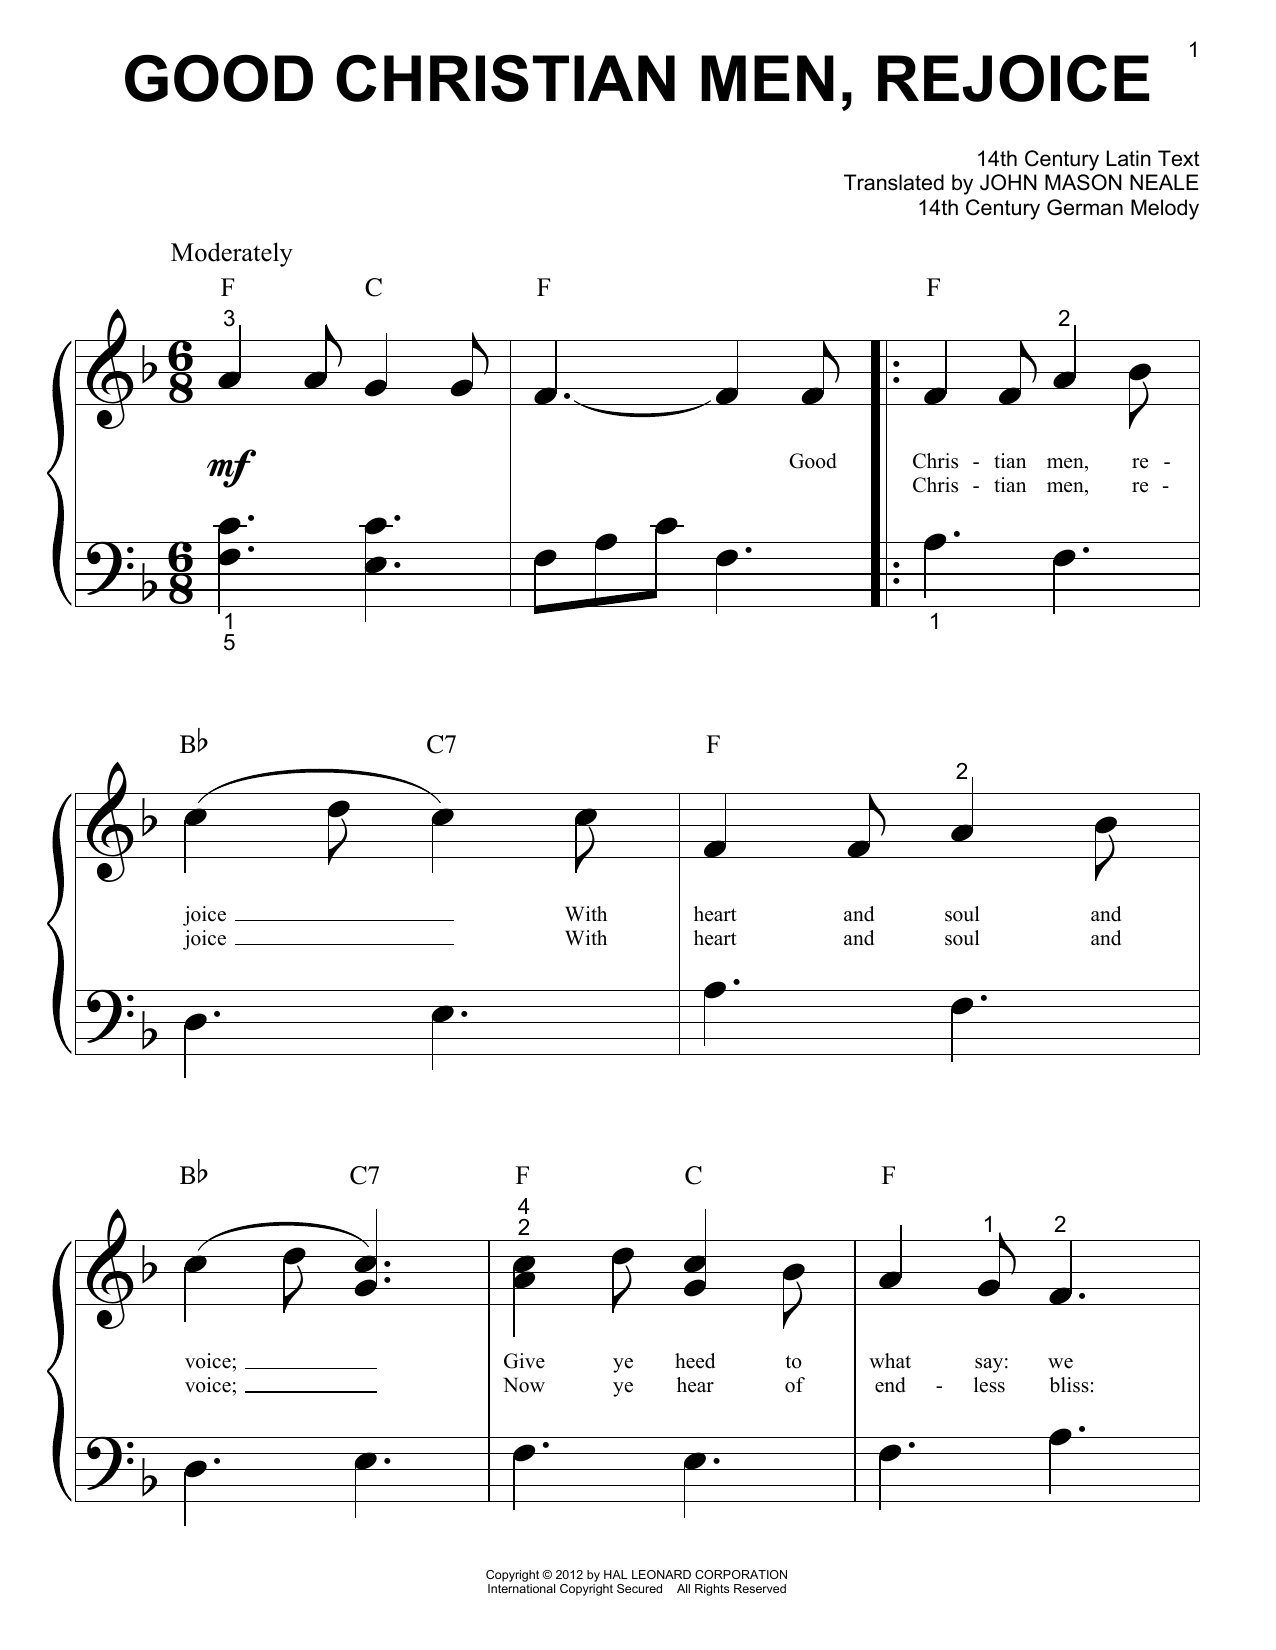 Christmas Carol Good Christian Men Rejoice Sheet Music Notes & Chords for Lyrics & Chords - Download or Print PDF